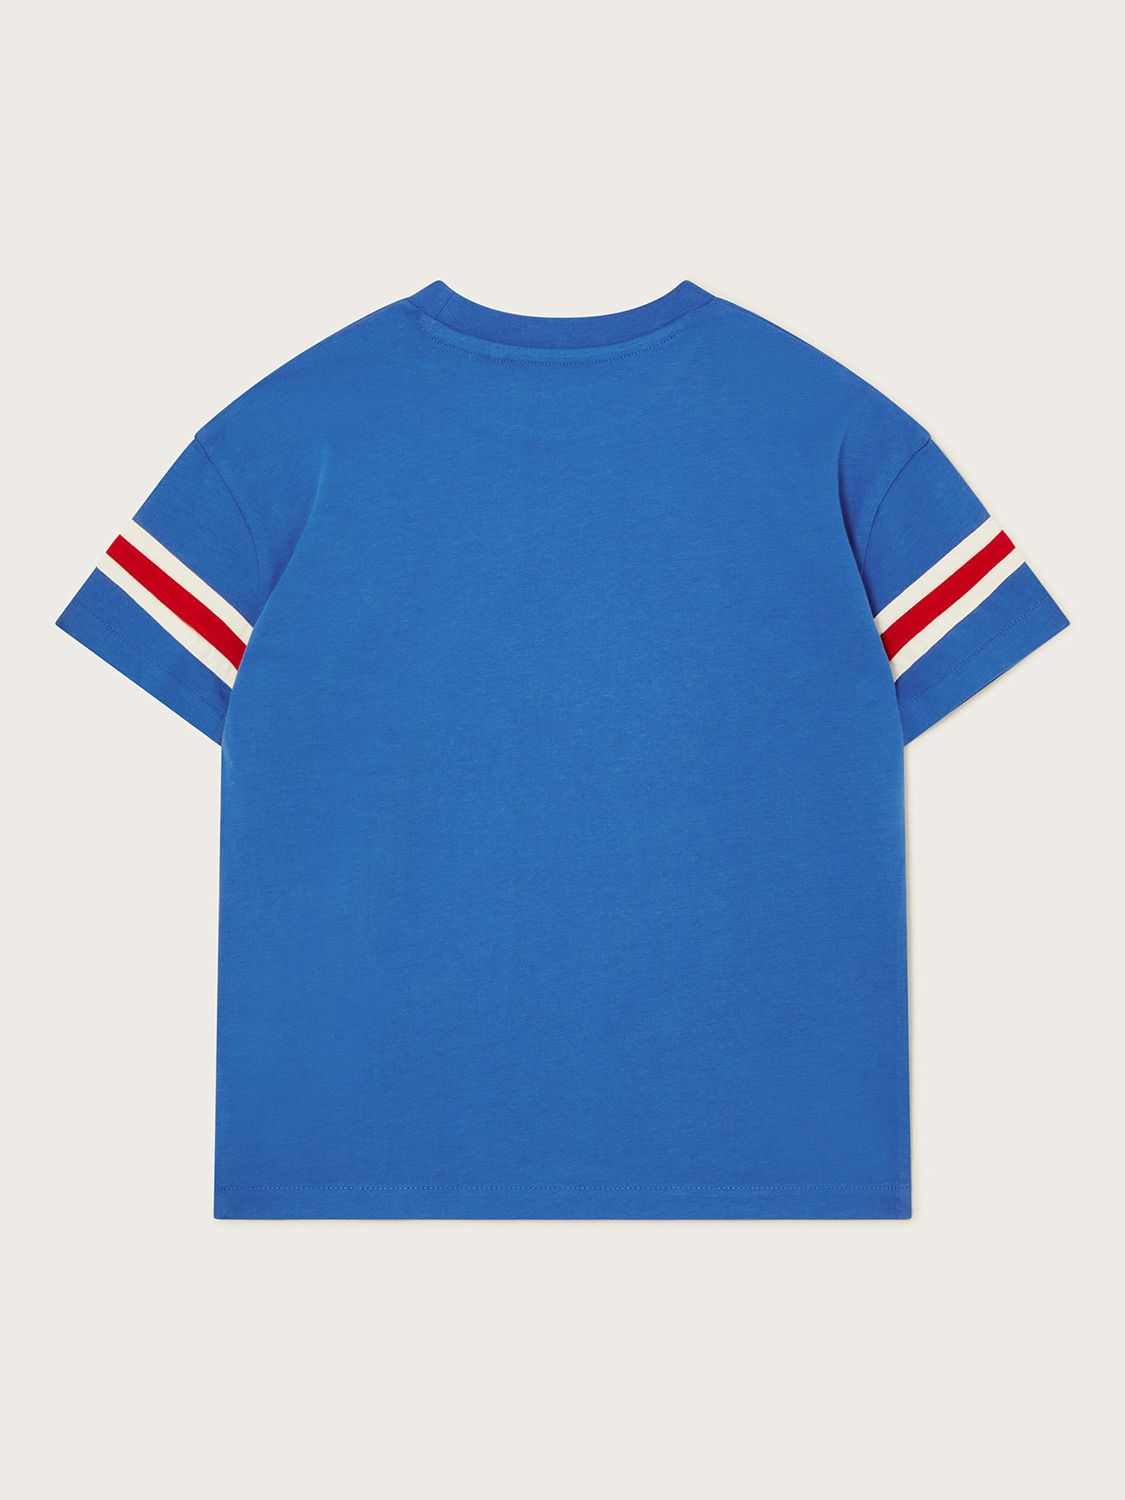 Monsoon Kids' Easy Peasy T-Shirt, Blue/Multi, 3-4 years